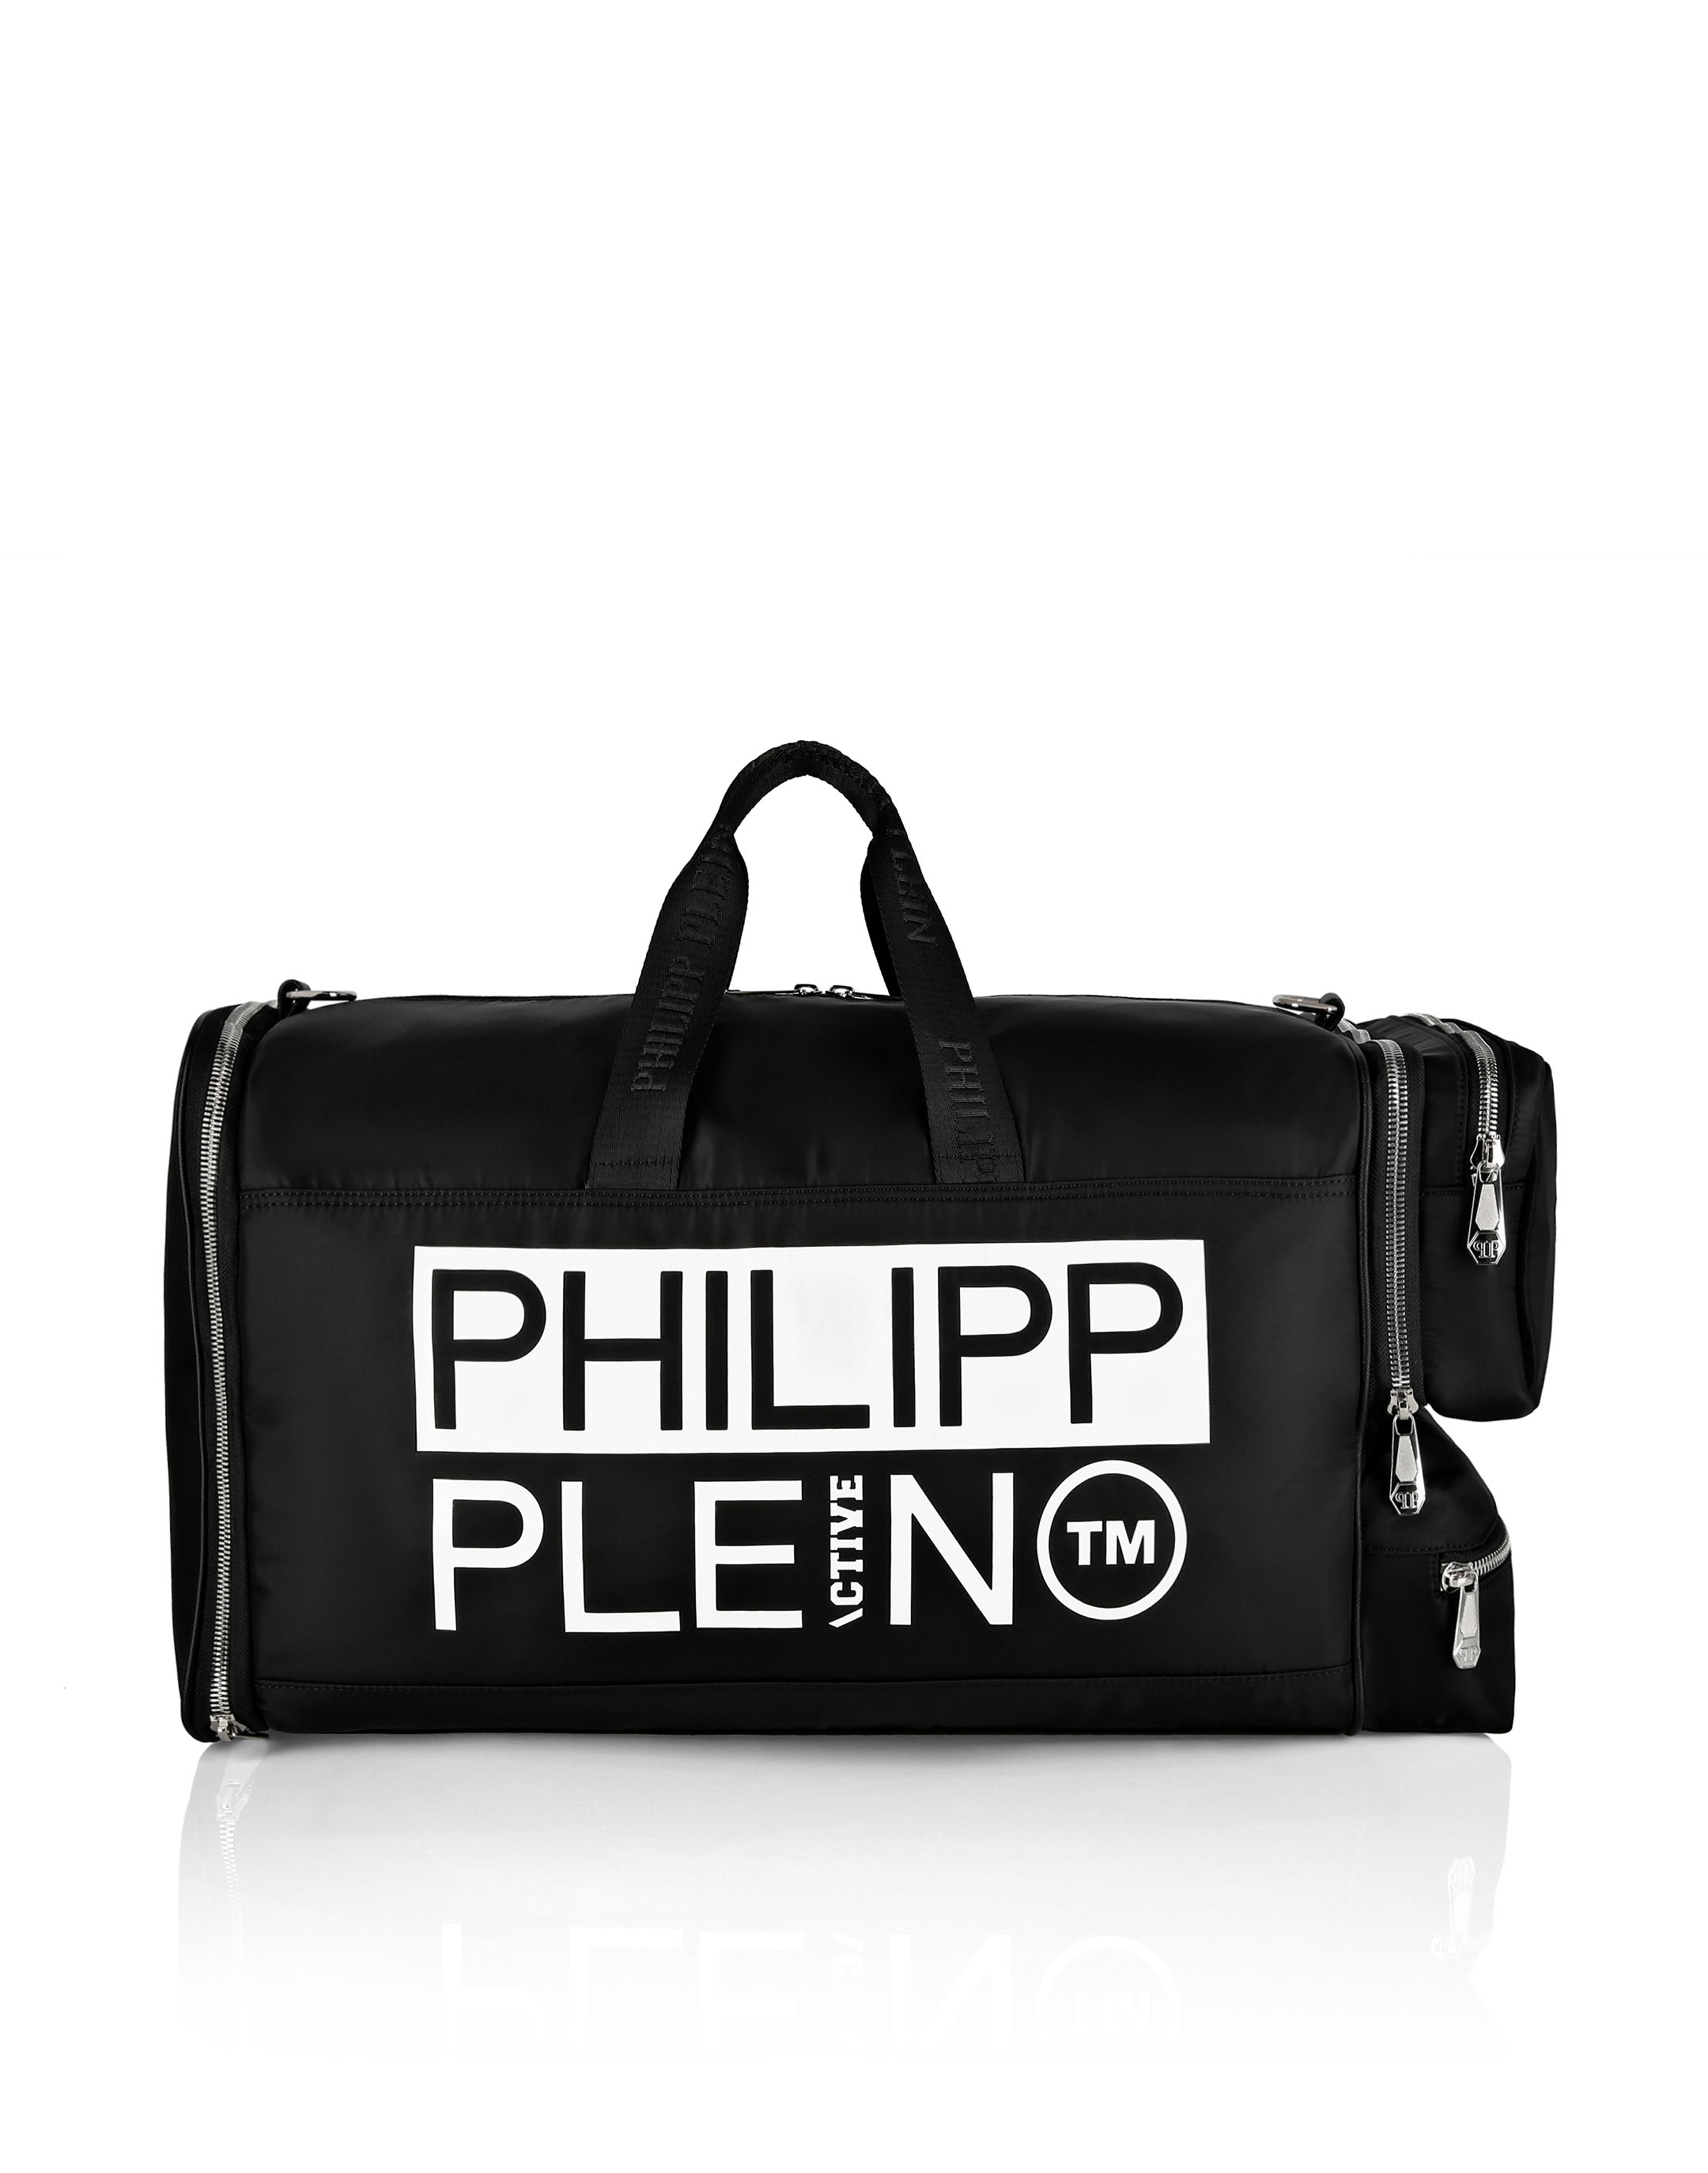 sport bag Philipp Plein TM | Philipp Plein Outlet